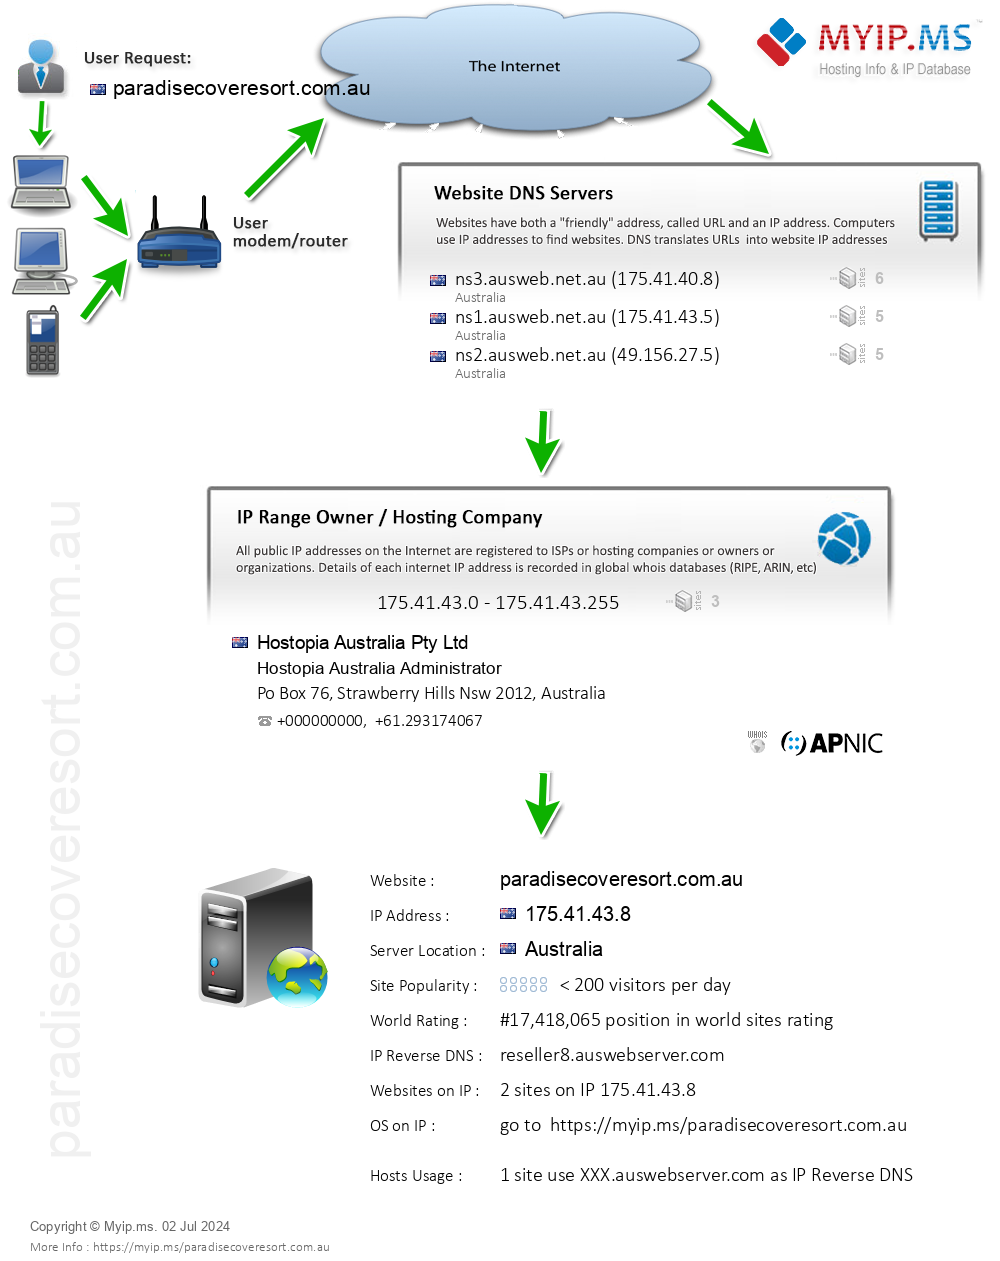 Paradisecoveresort.com.au - Website Hosting Visual IP Diagram